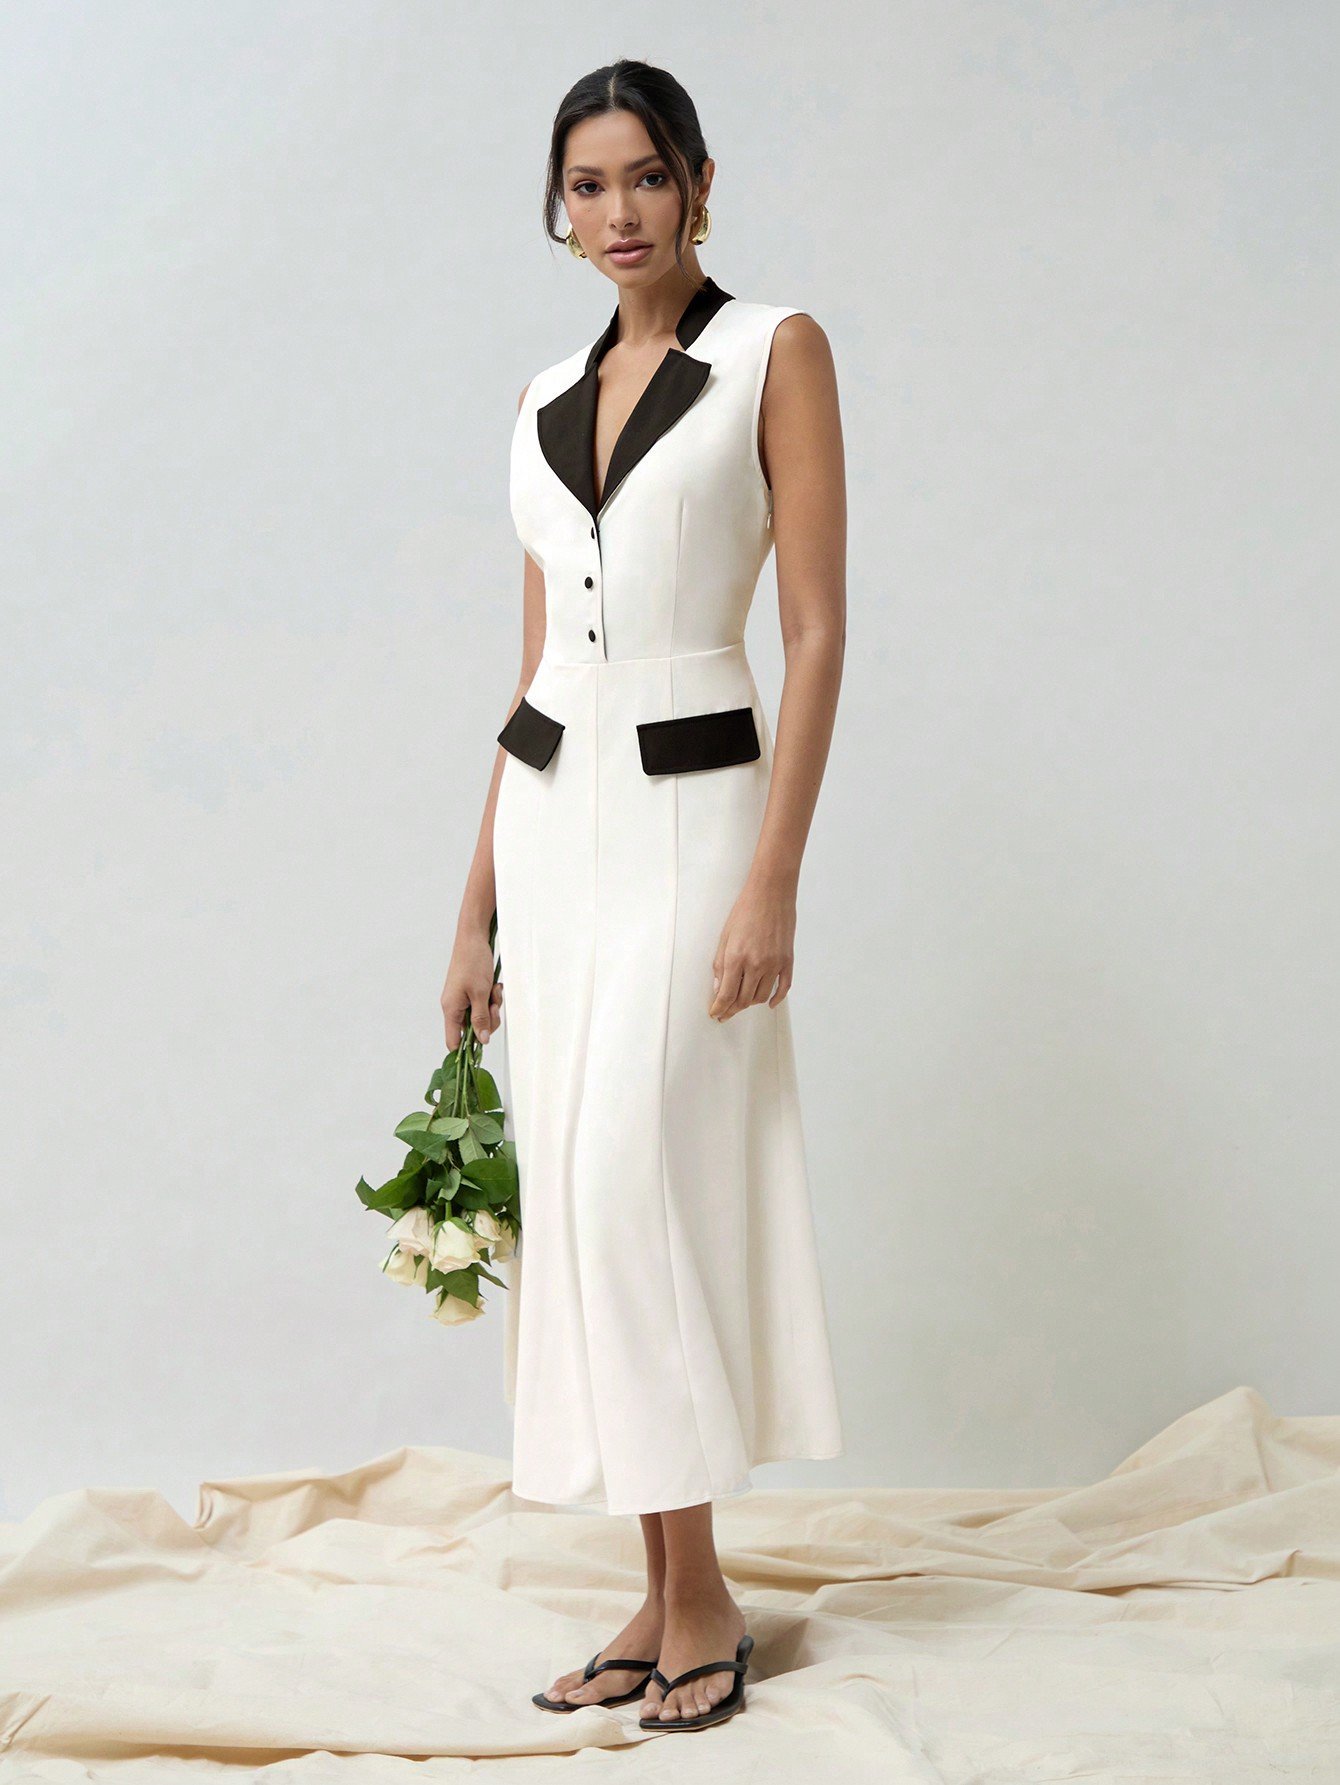 SHEIN Neu 女性用フォーマルドレス、ブラックアンドホワイトの対比色、フィッシュテールスタンドカラー、ジョイントカラー、袖なしデザイン